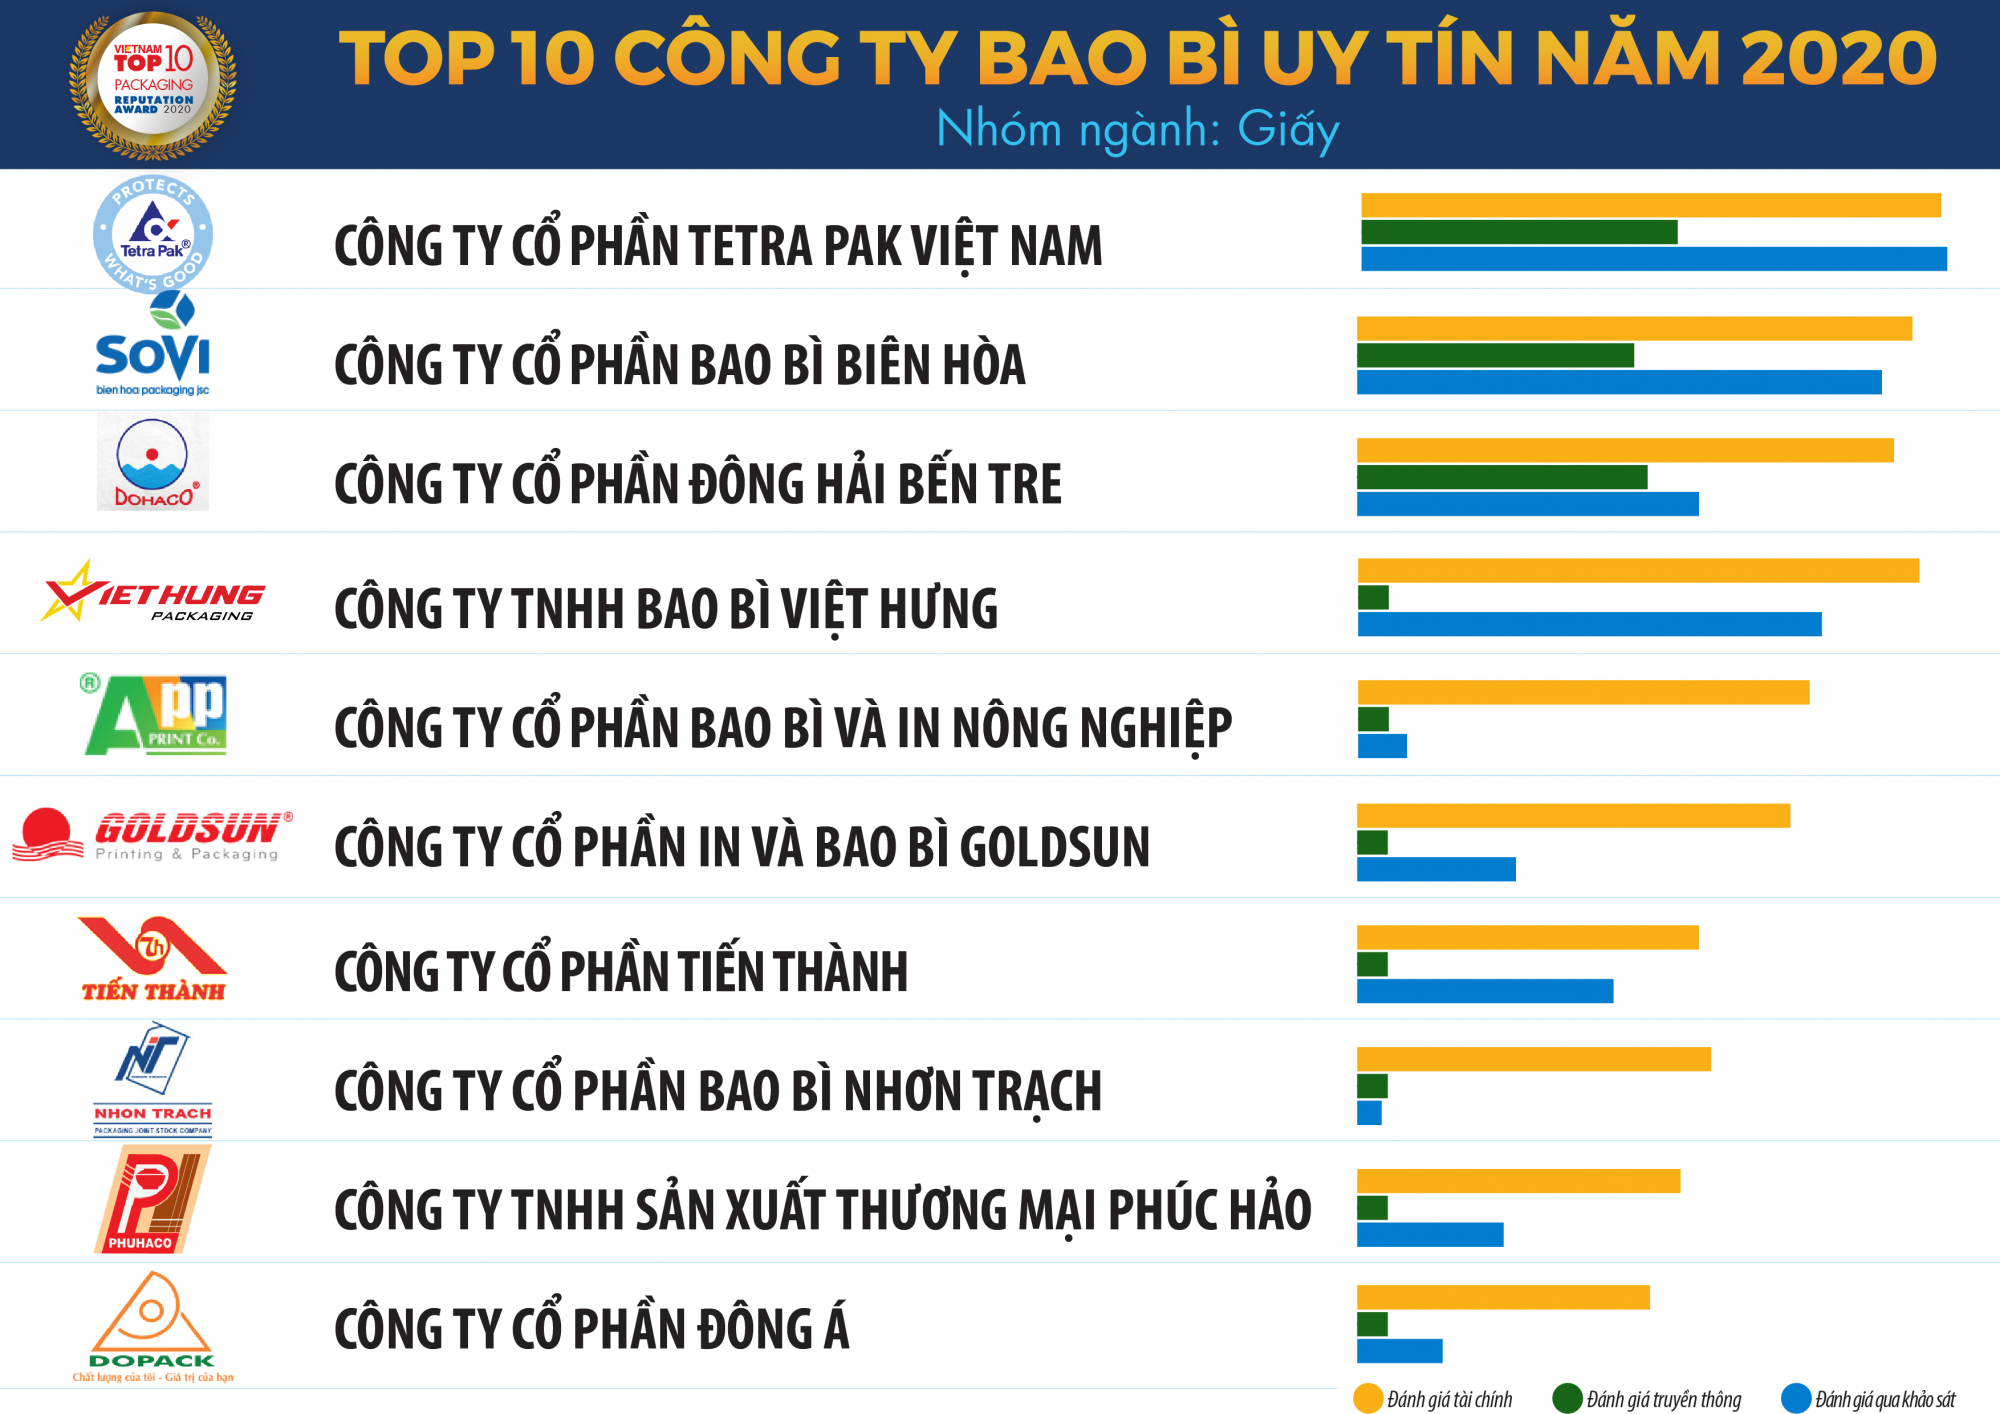 TCBC Top 10 Bao bi 2020_Danh sach 1